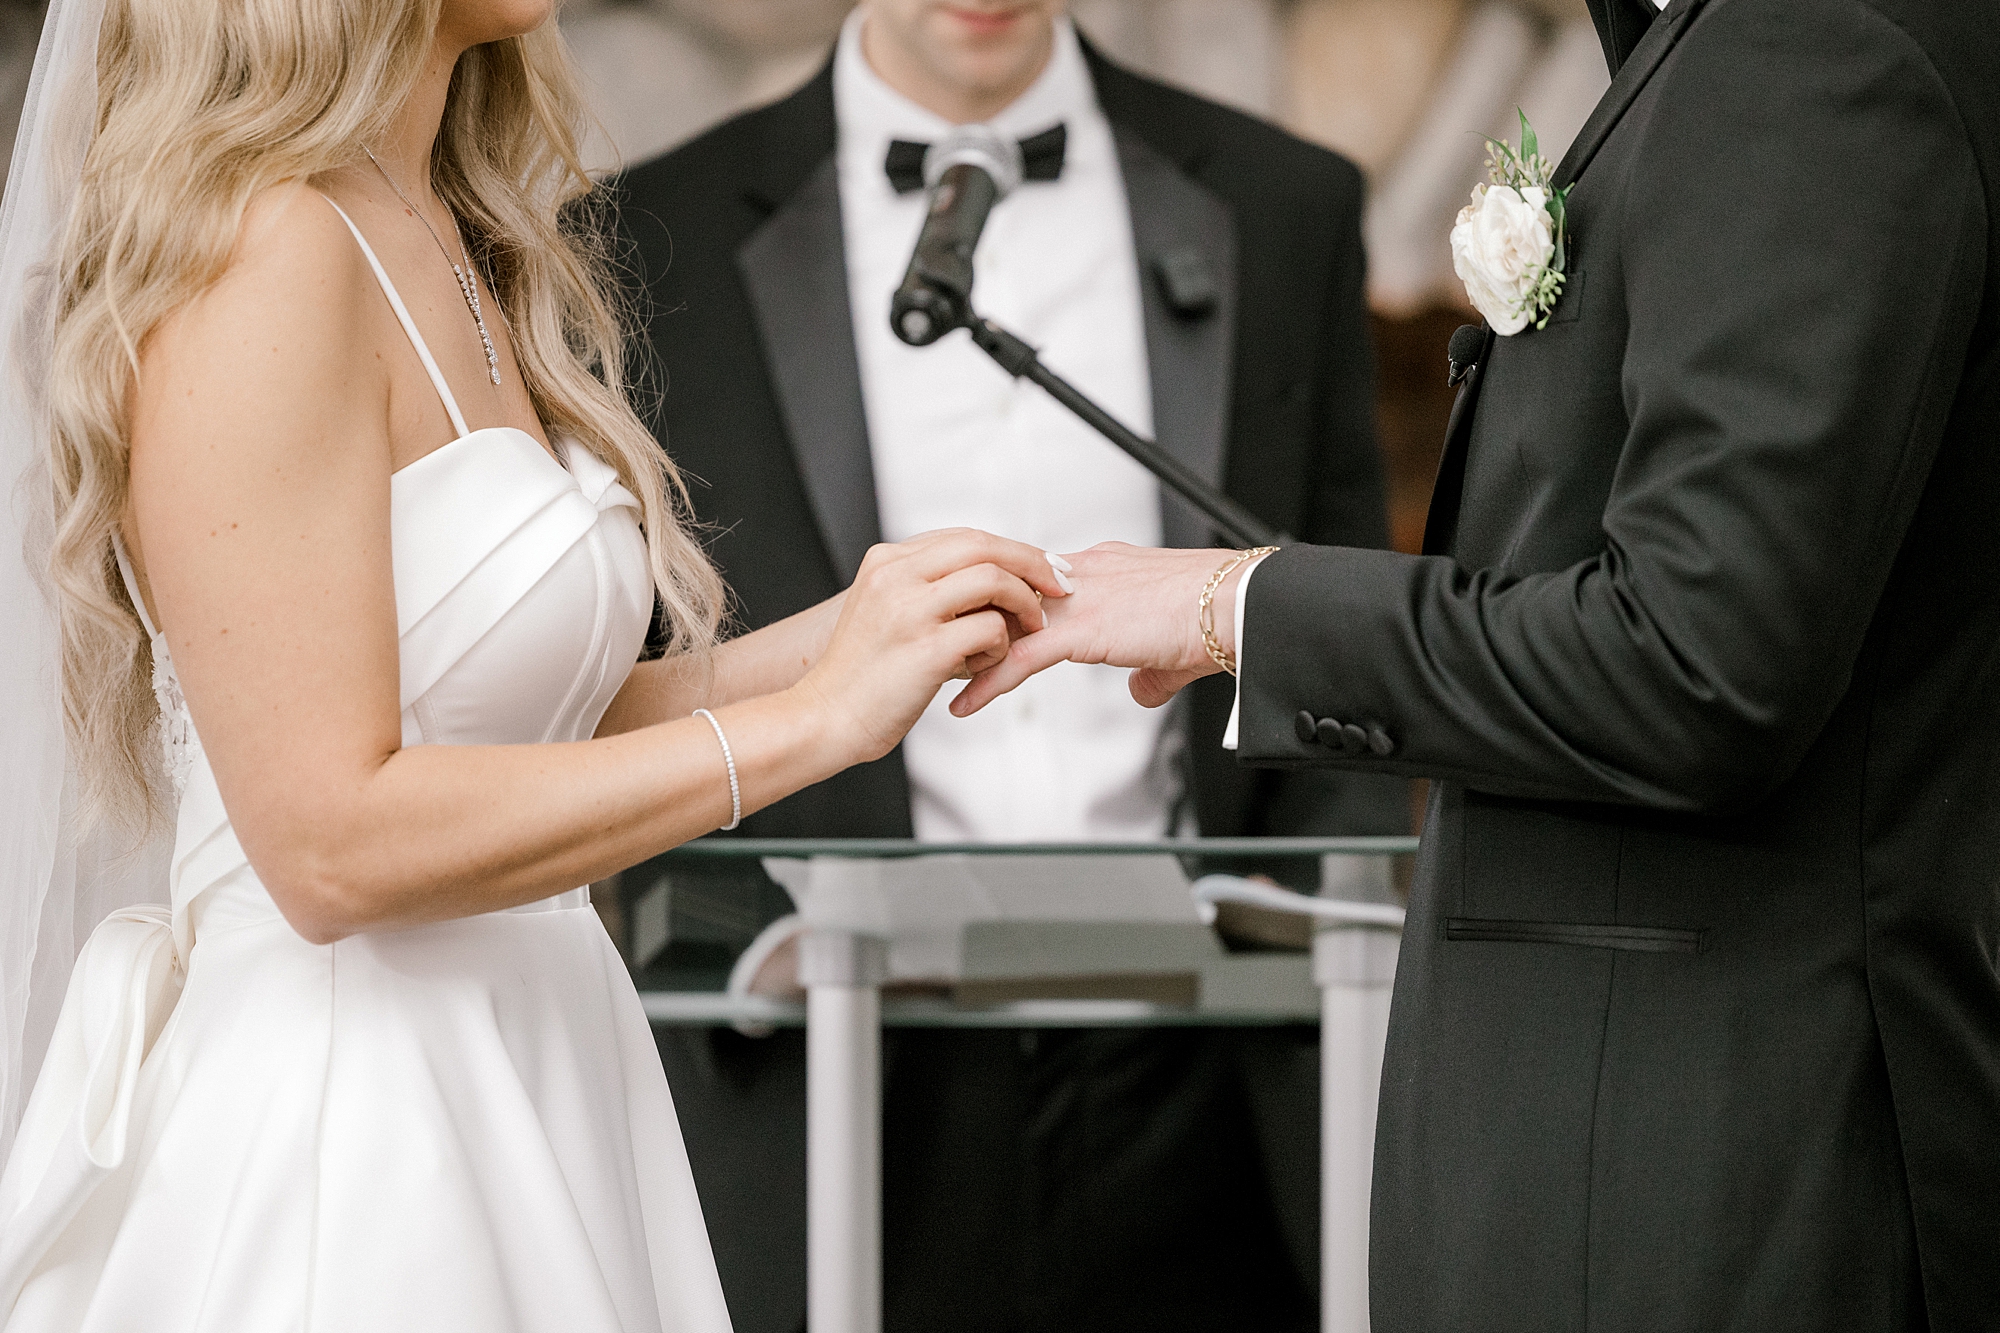 bride places groom's rig on finger during wedding ceremony at Bonnet Island Estate